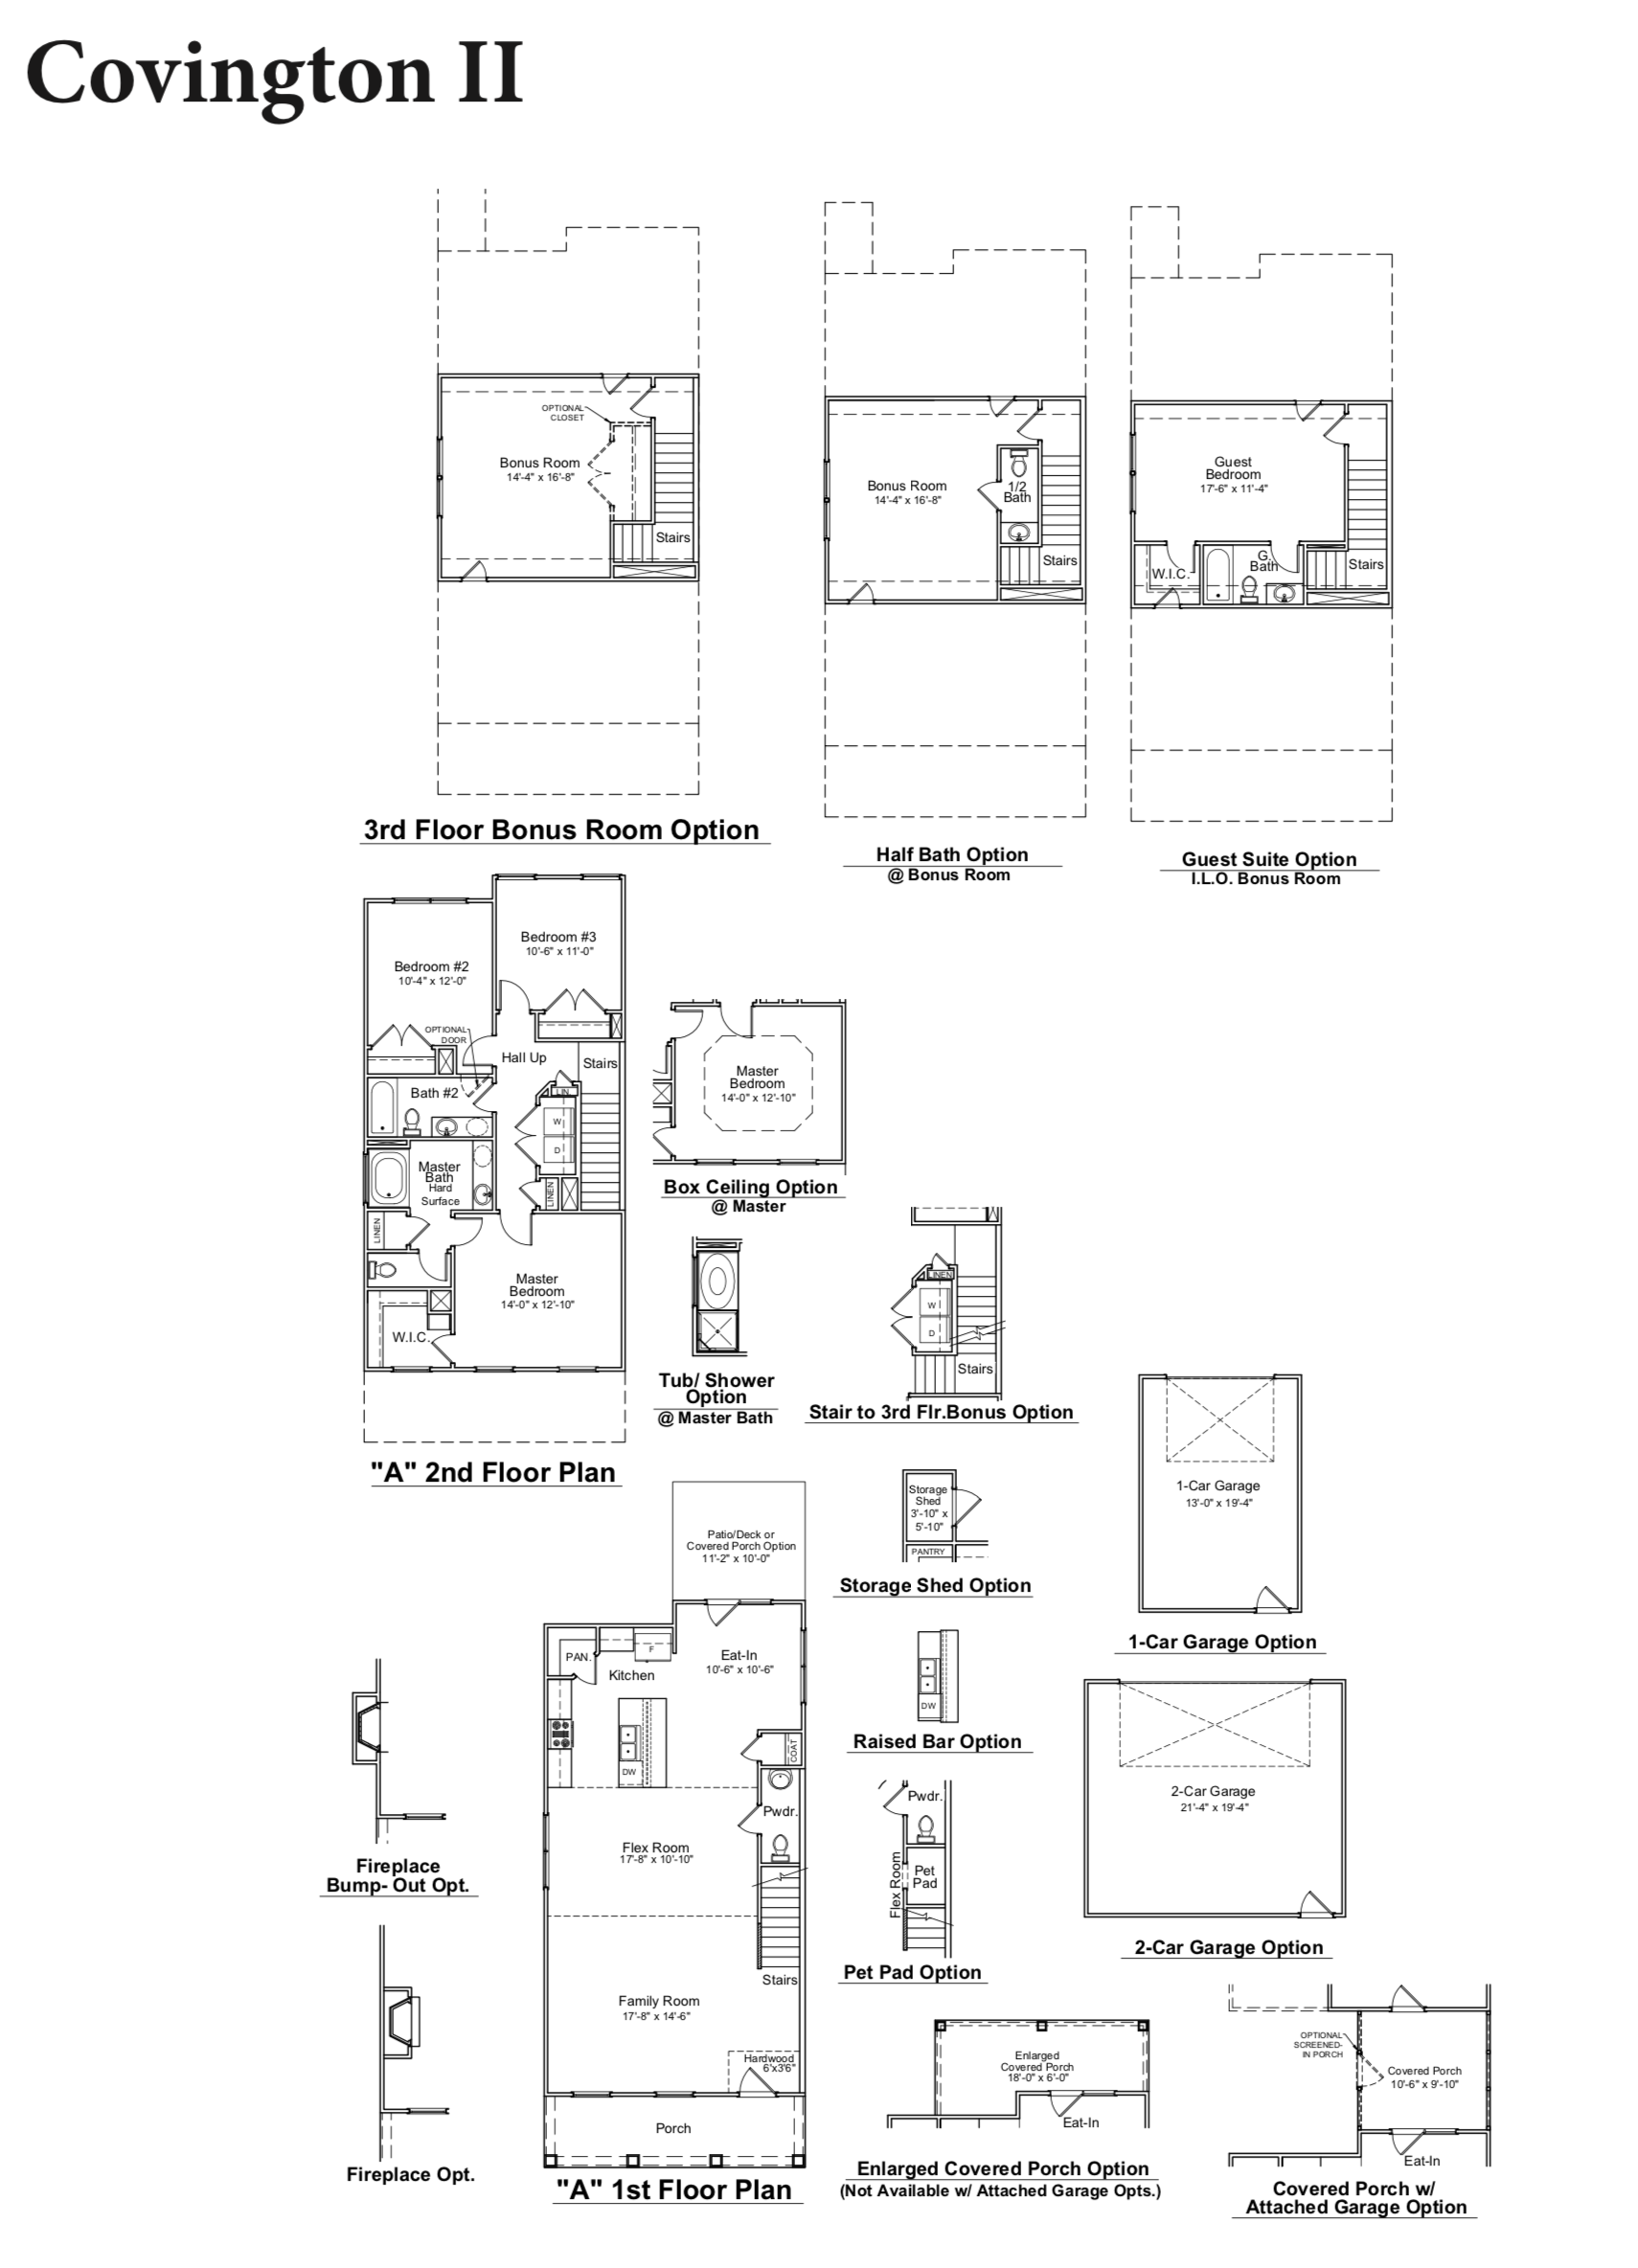 Covington II floor plan image